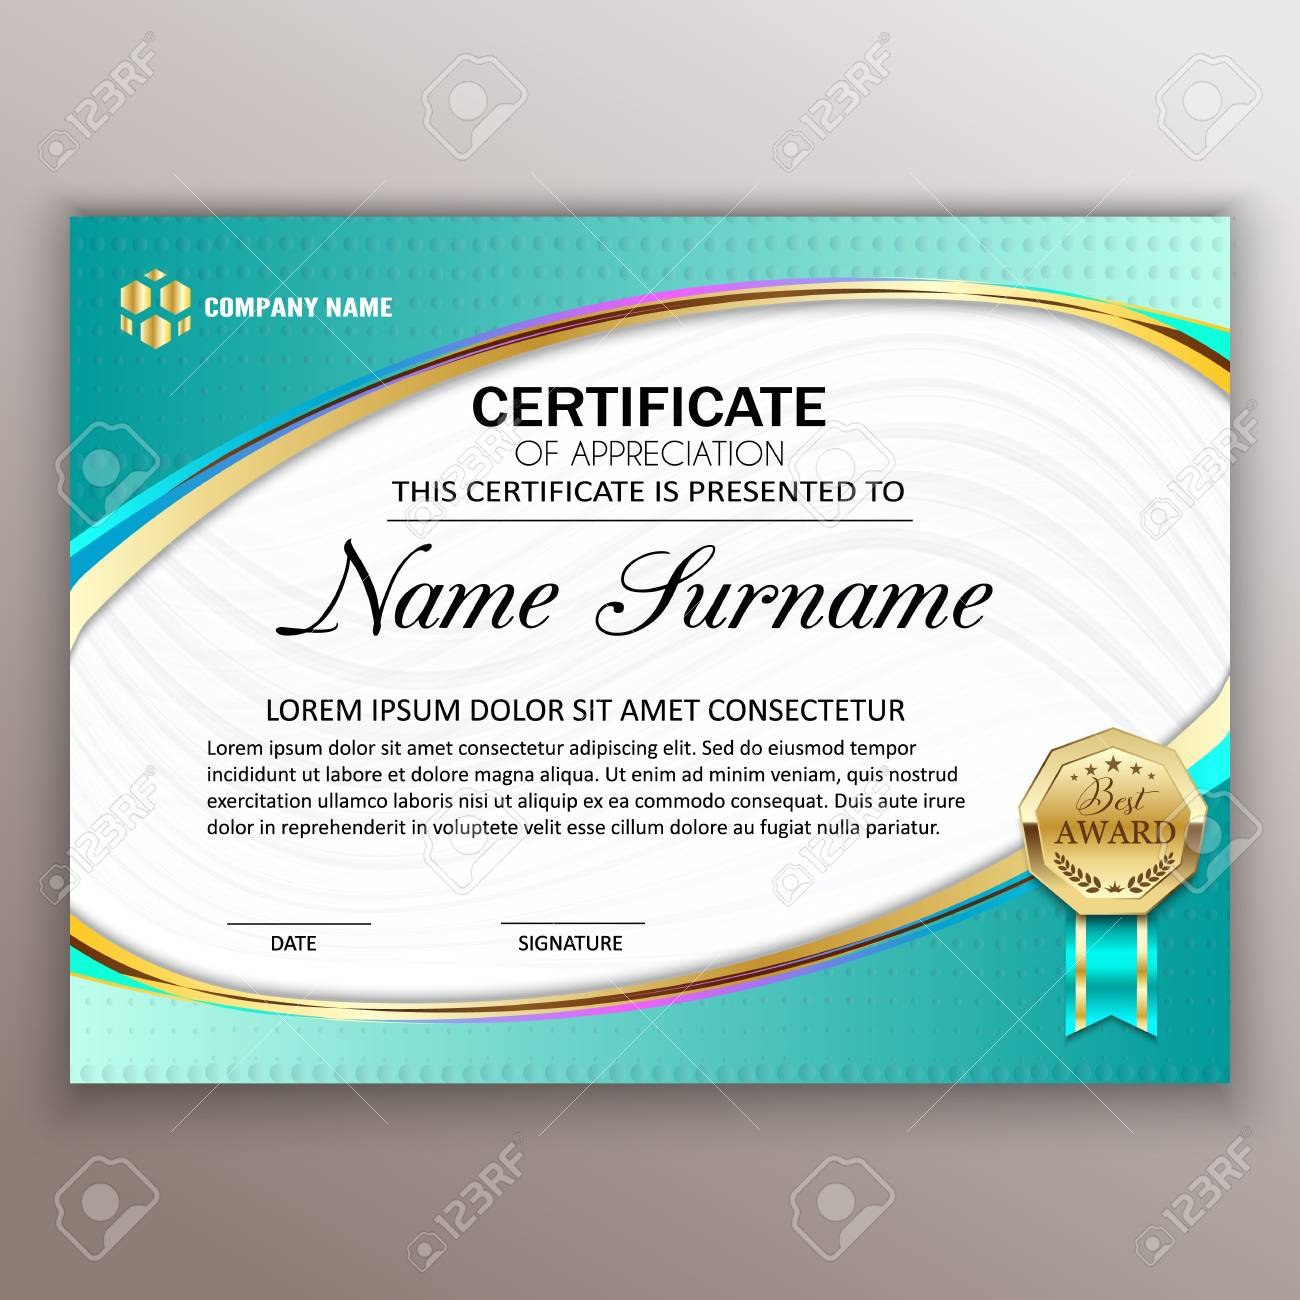 Beautiful Certificate Template Design With Best Award Symbol regarding Beautiful Certificate Templates